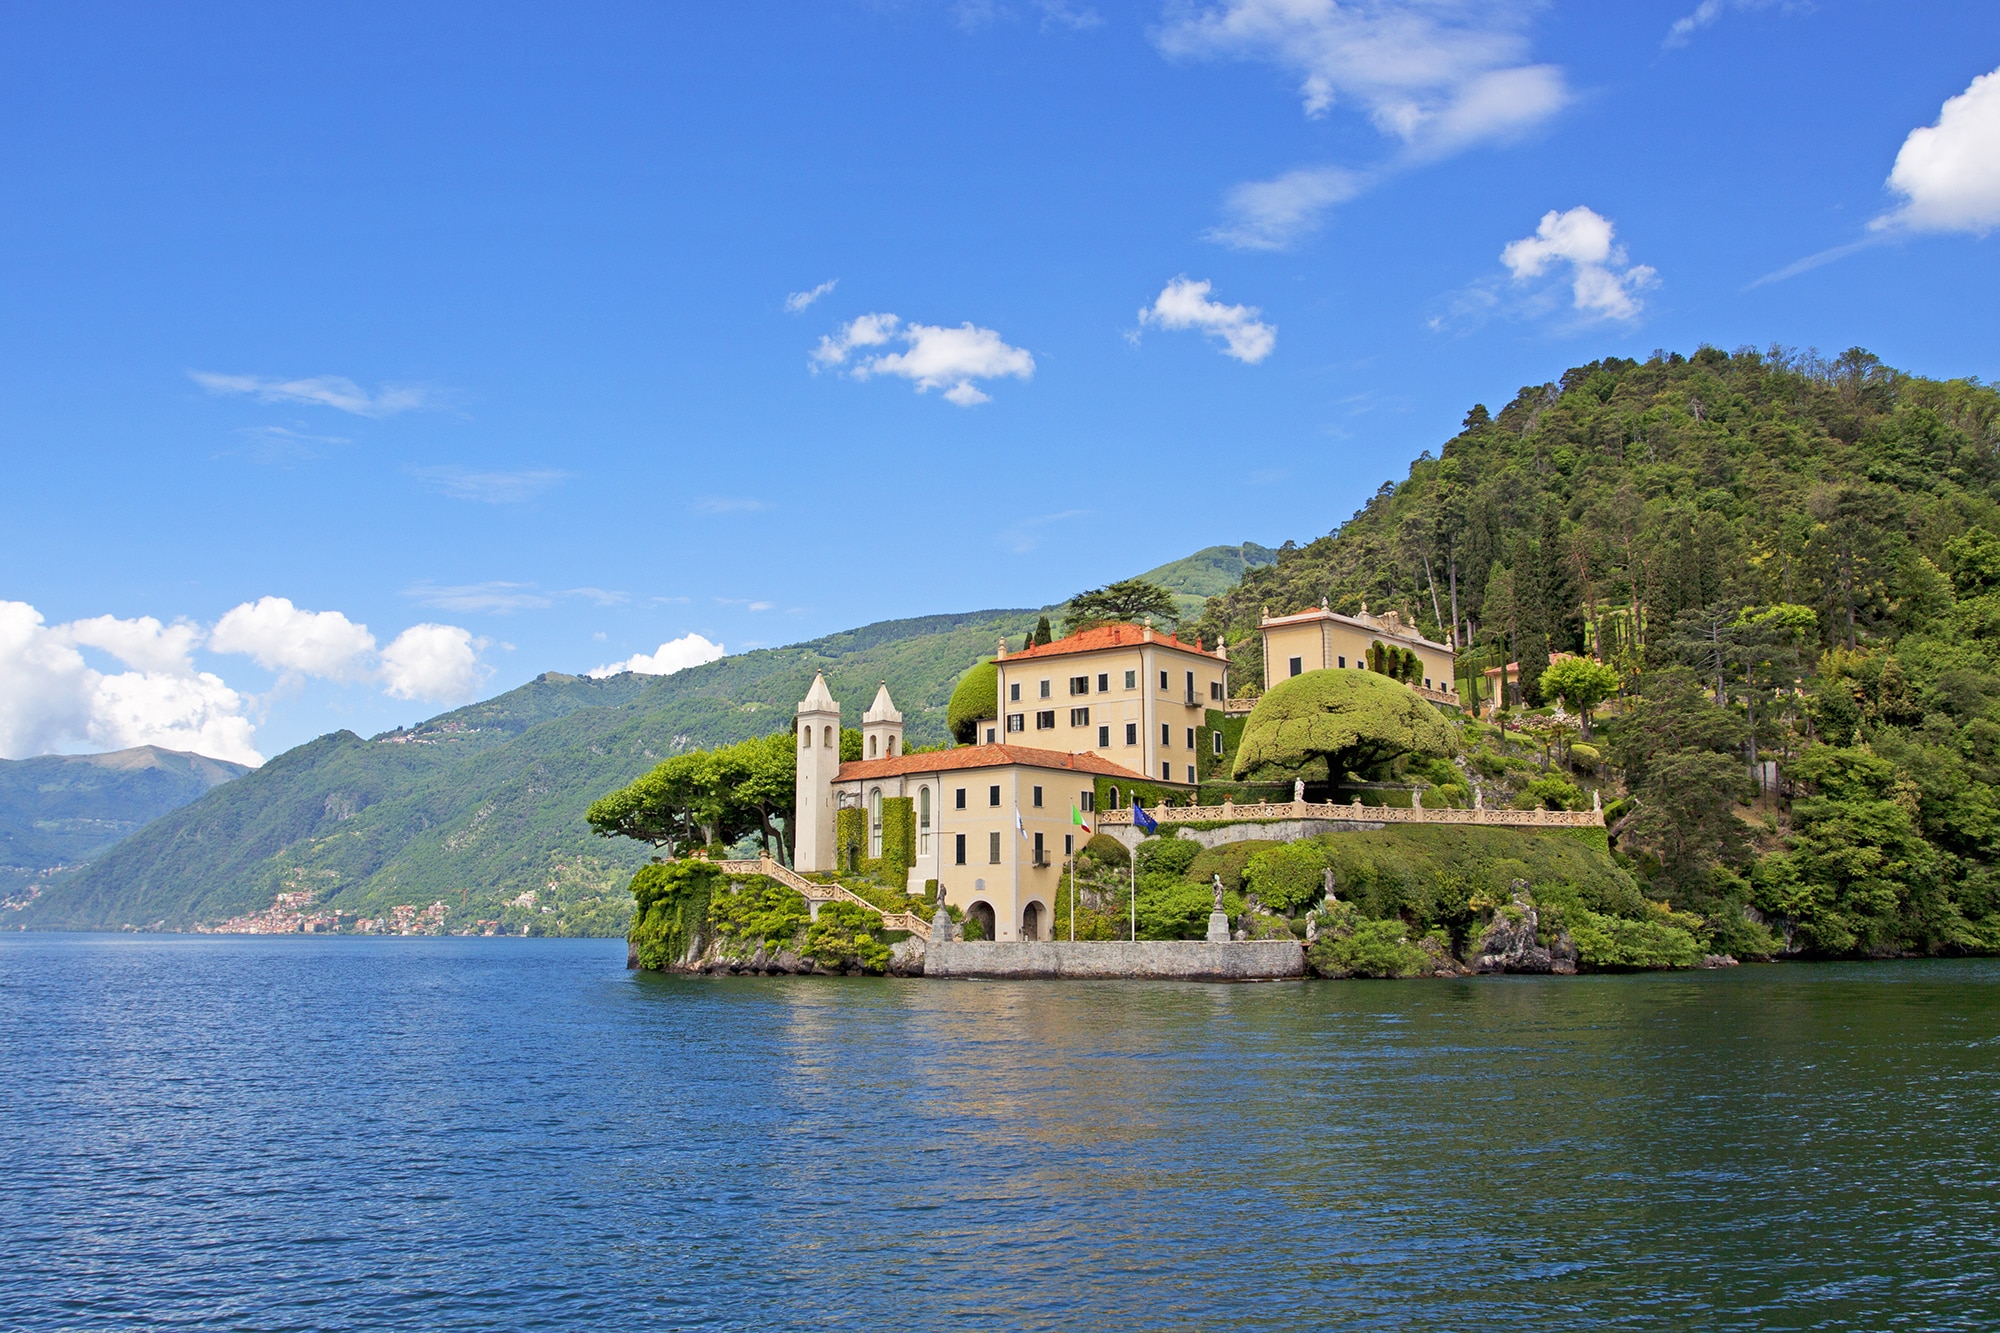 Star Wars Filming Locations: Lake Como, Italy